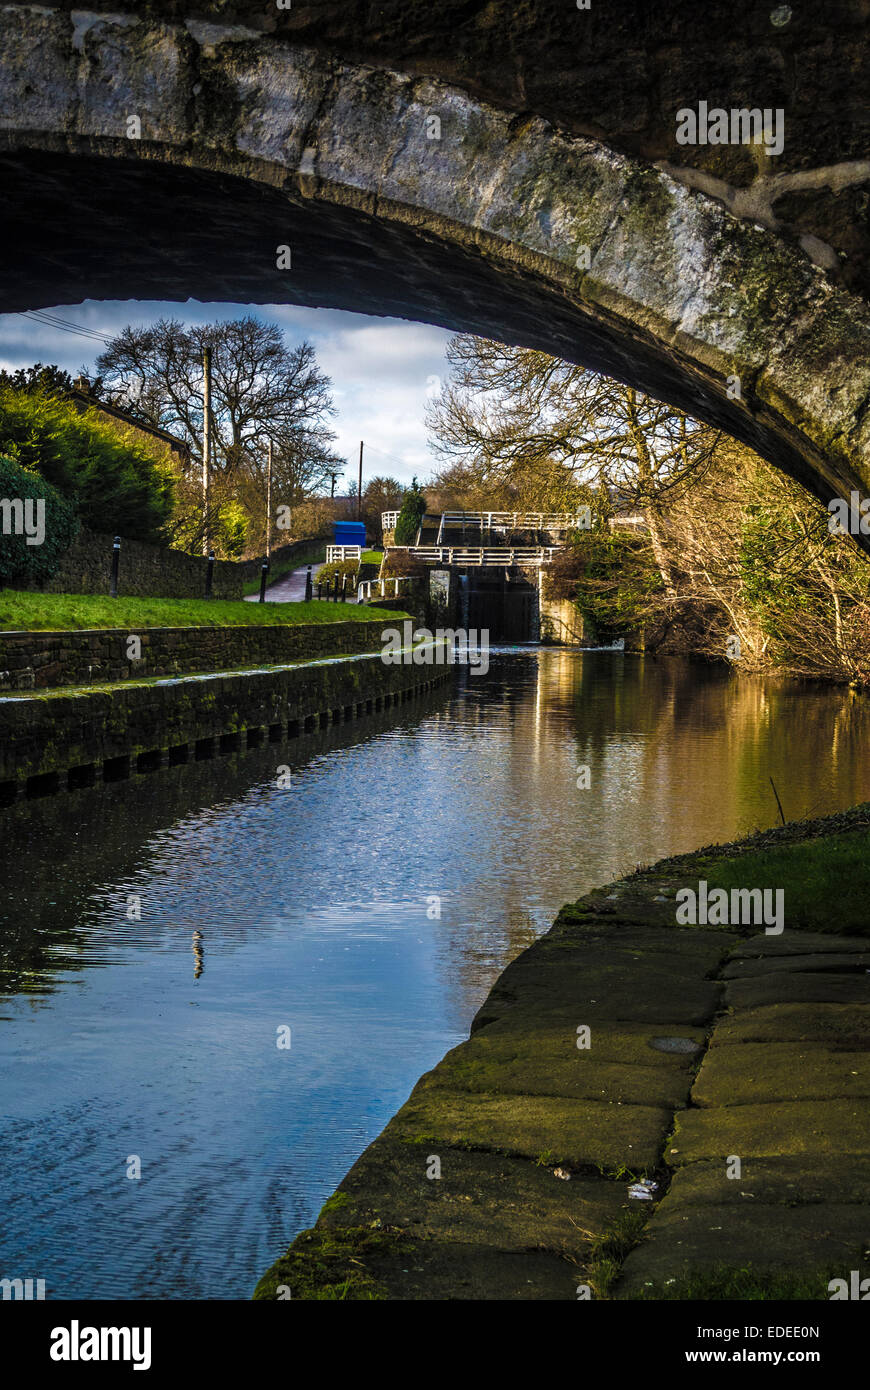 Doweley Gap Locks seen through bridge arch, Leeds Liverpool Canal. Stock Photo